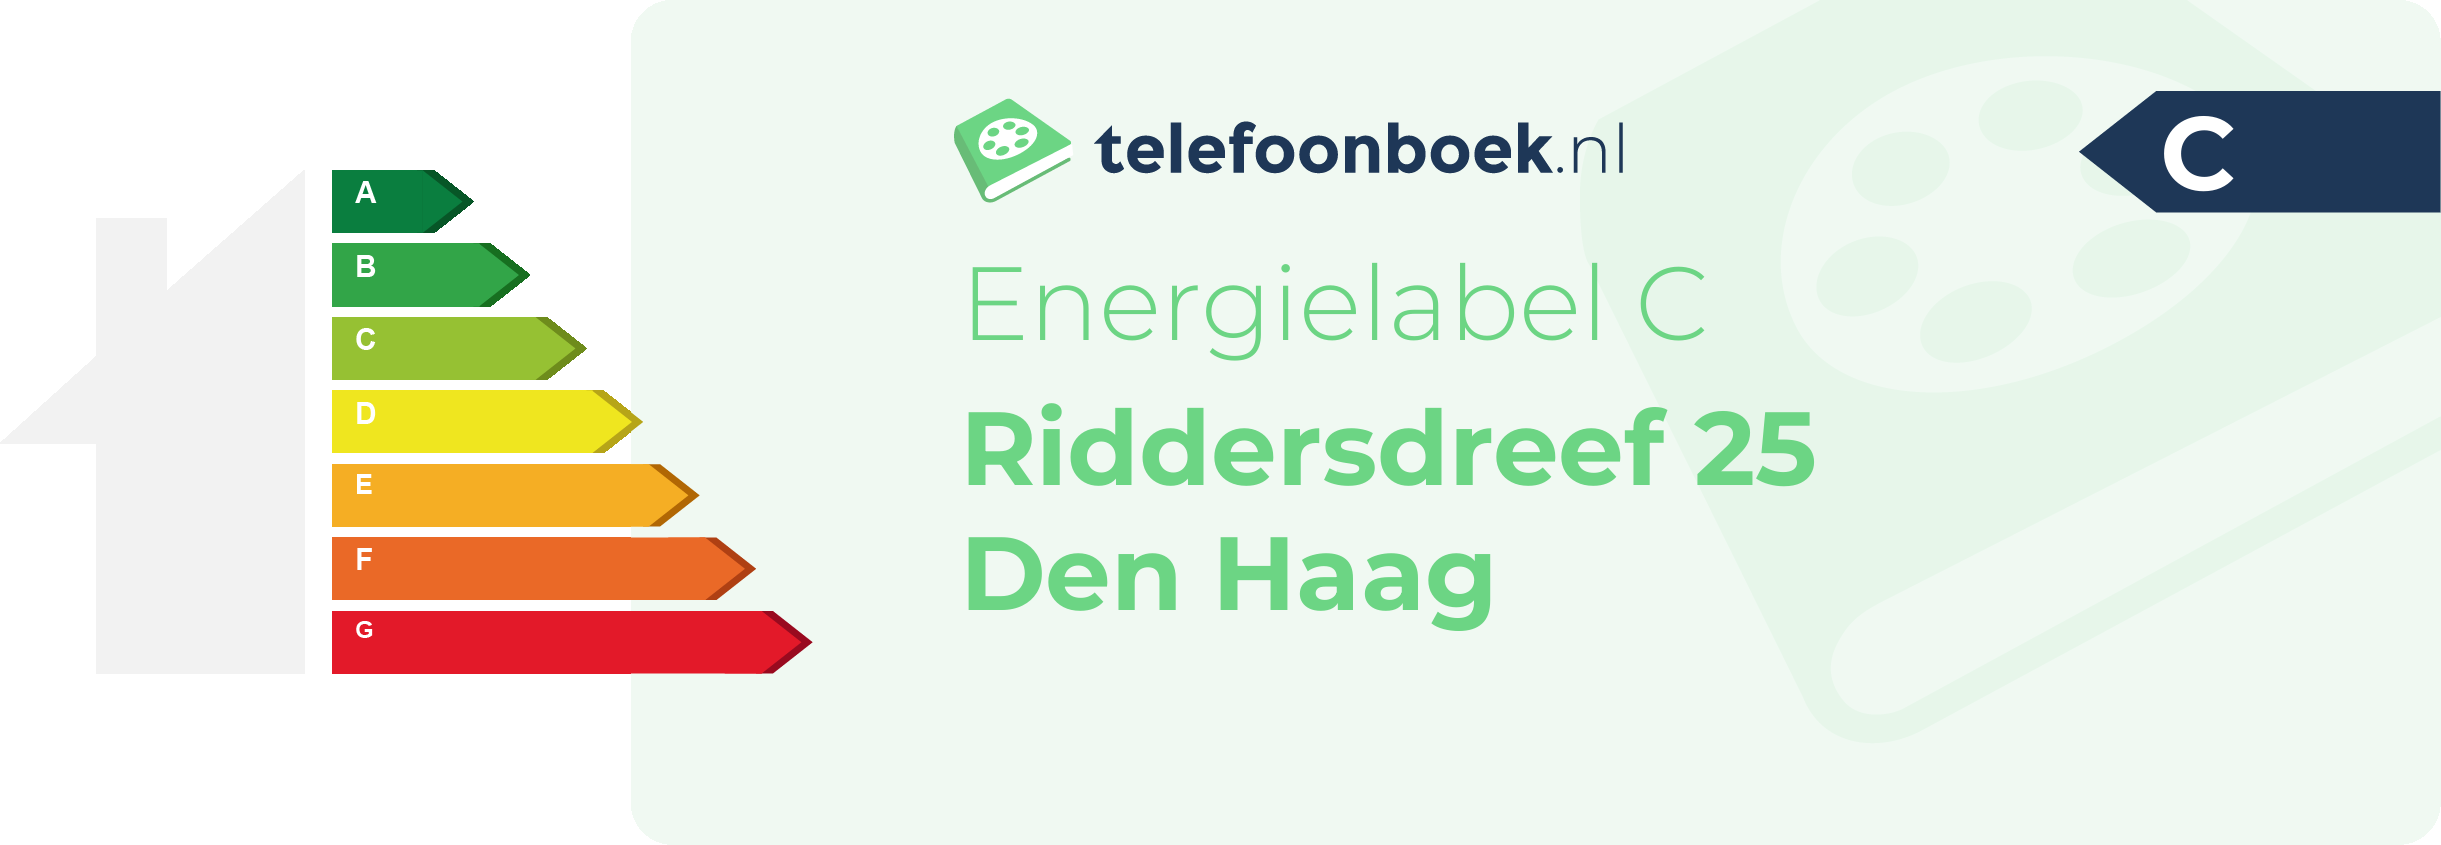 Energielabel Riddersdreef 25 Den Haag